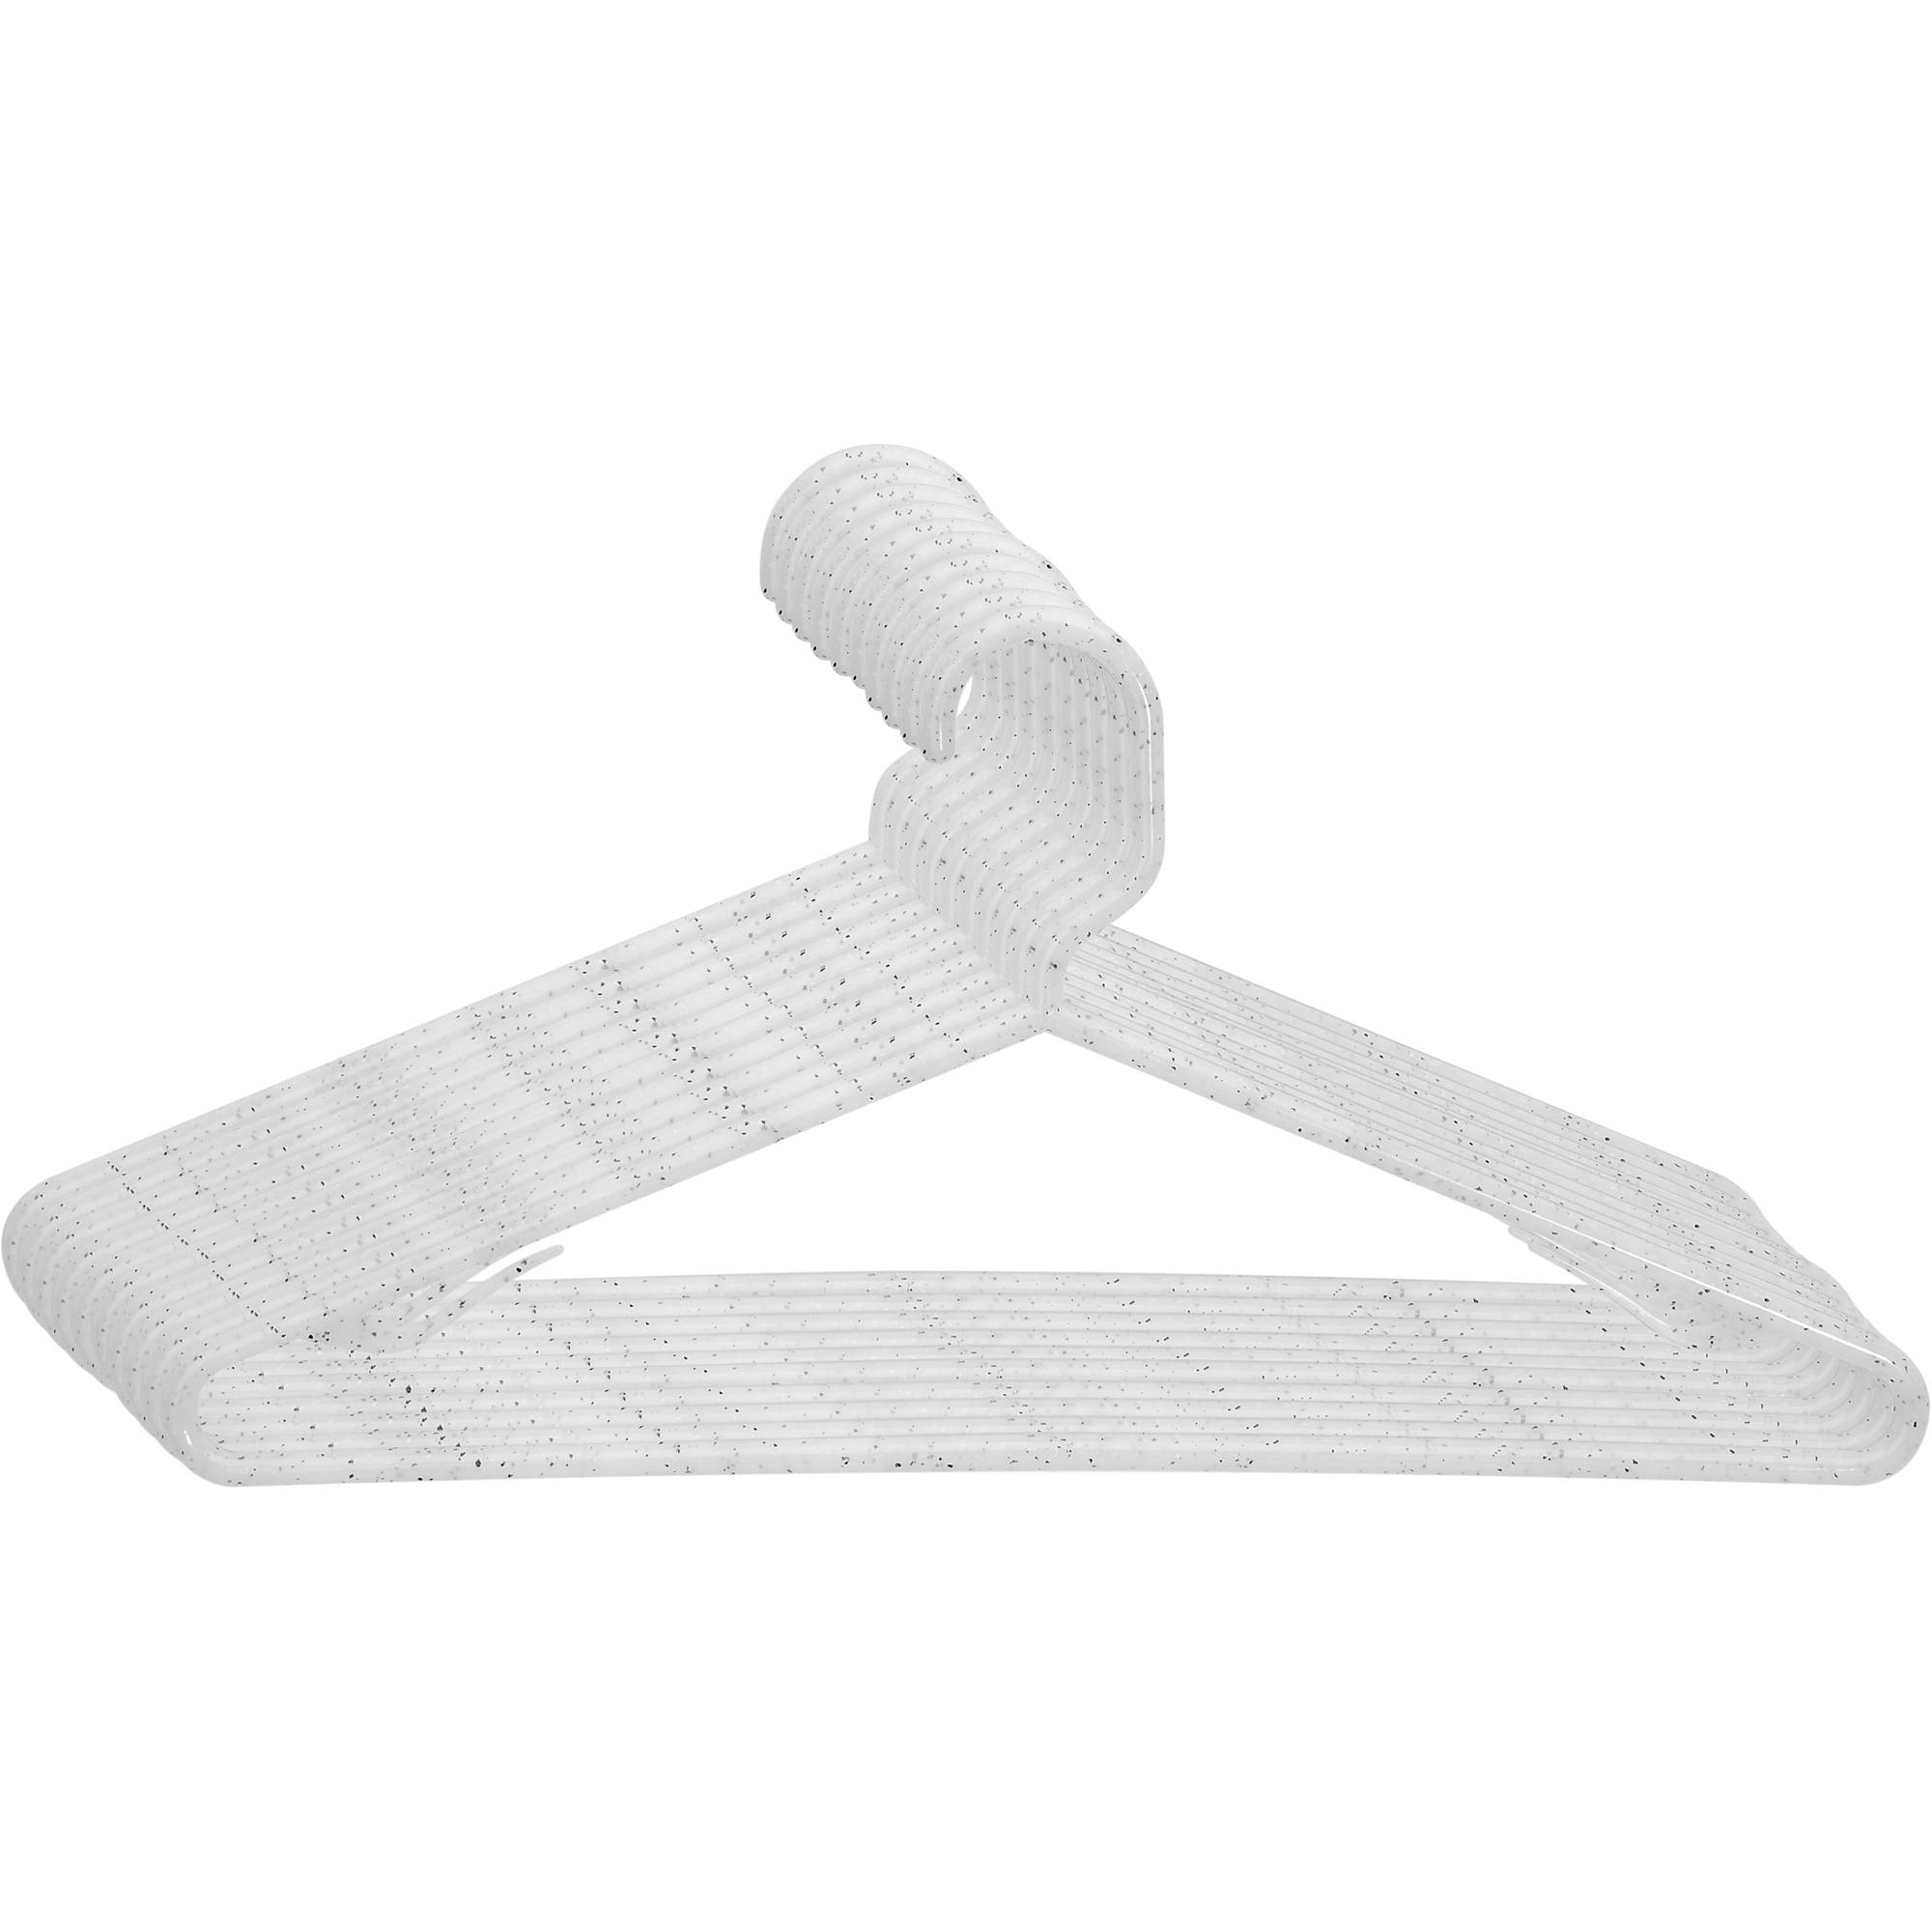 Simplify Granite Look Design Plastic Clothes Hangers, White, 10 Count - image 4 of 4